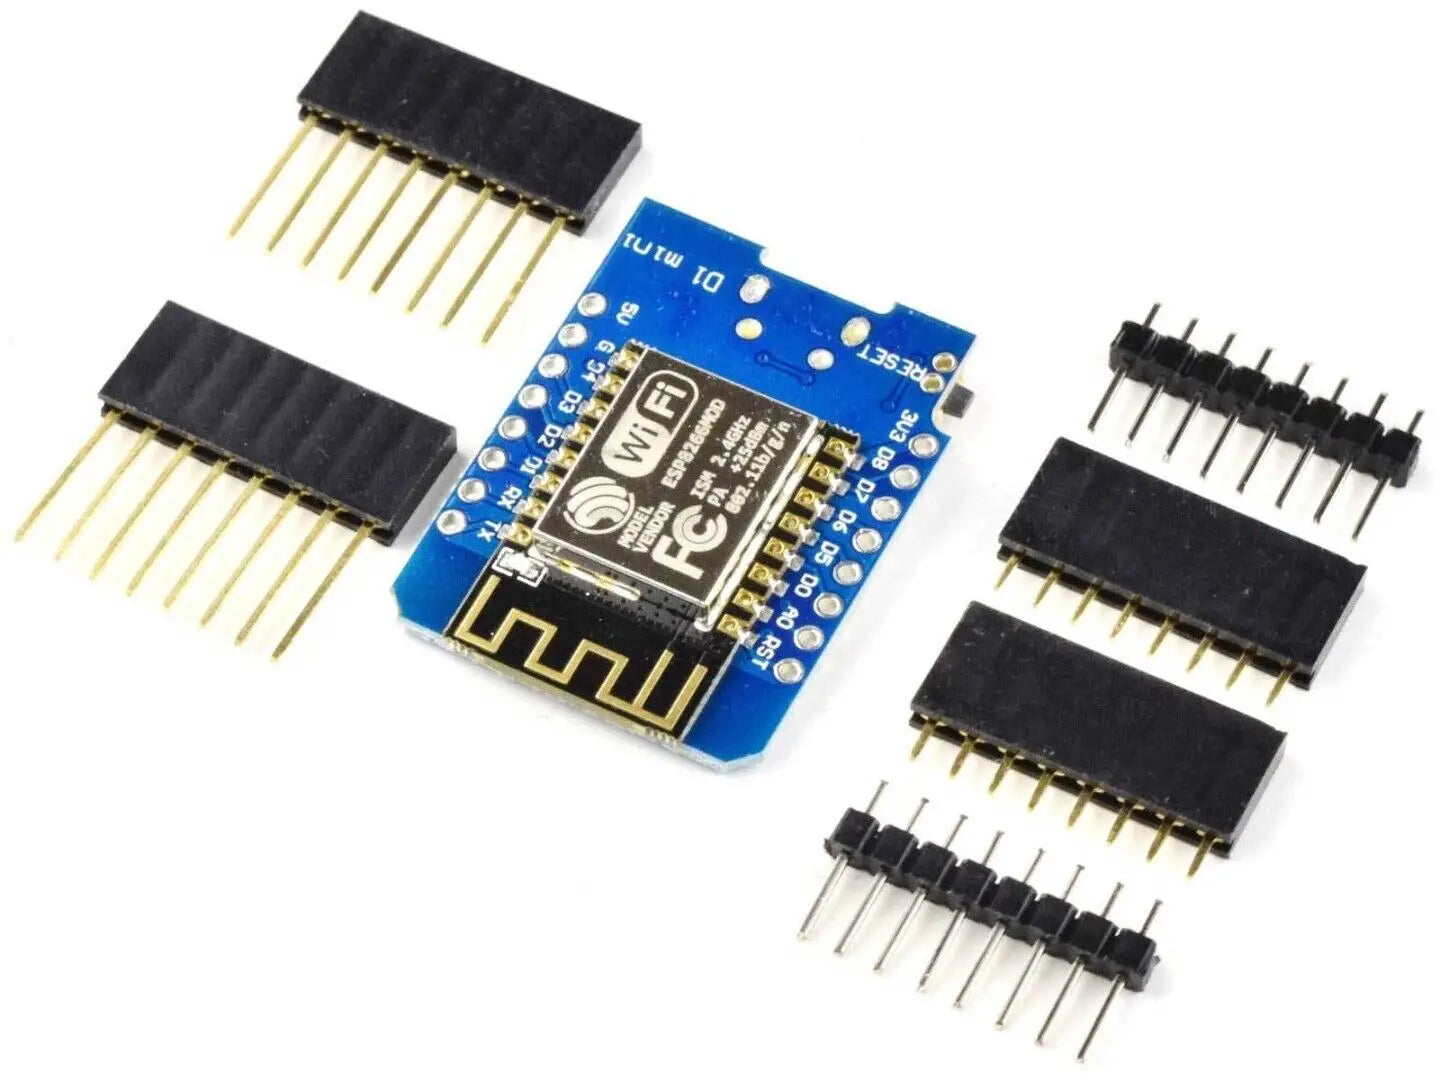 Image 1 - WEMOS D1 Mini ESP8266 4MB WiFi Module - Compatible with Arduino Lua and NodeMCU